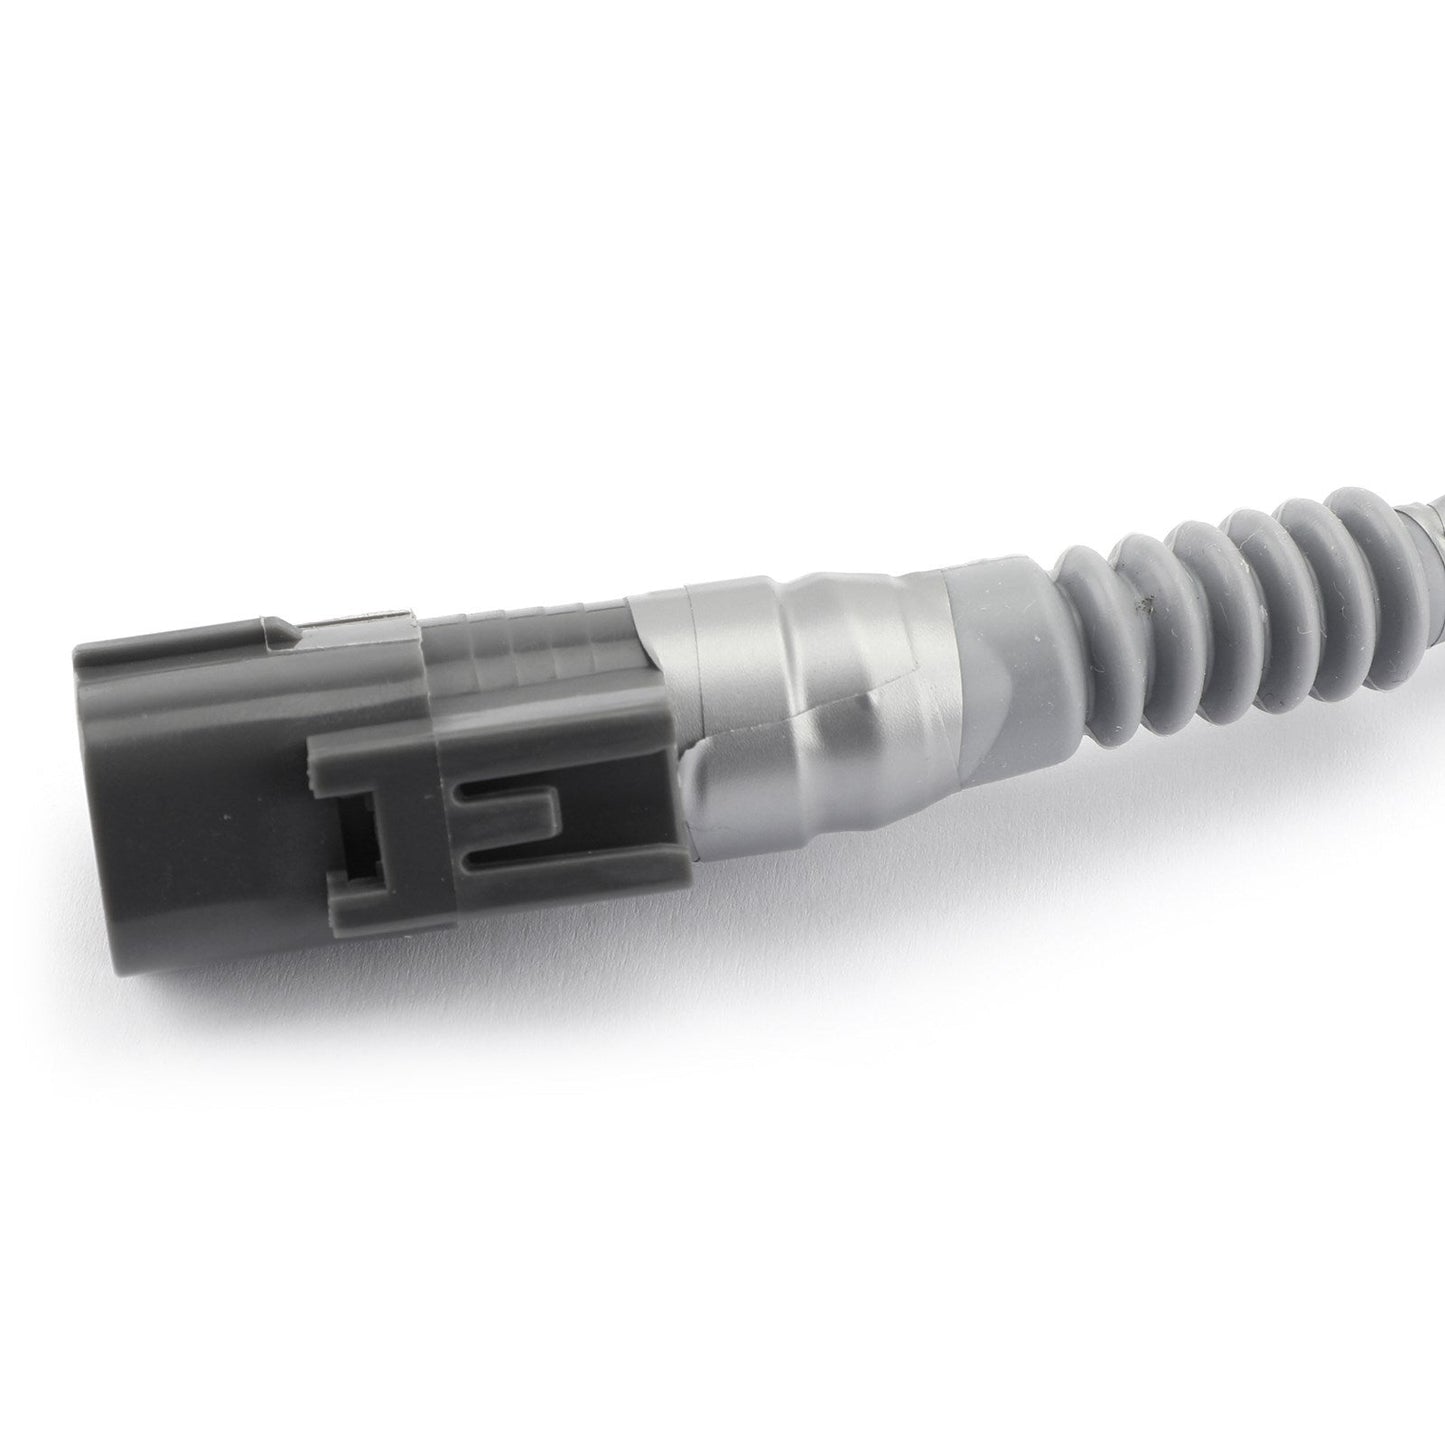 Ignition Knock Sensor Wire Harness For Toyota Avalon 03 04 Camry 98-06 Solara 99-03 Lexus ES330 04 ES300 98-03 RX300 99-03 Black